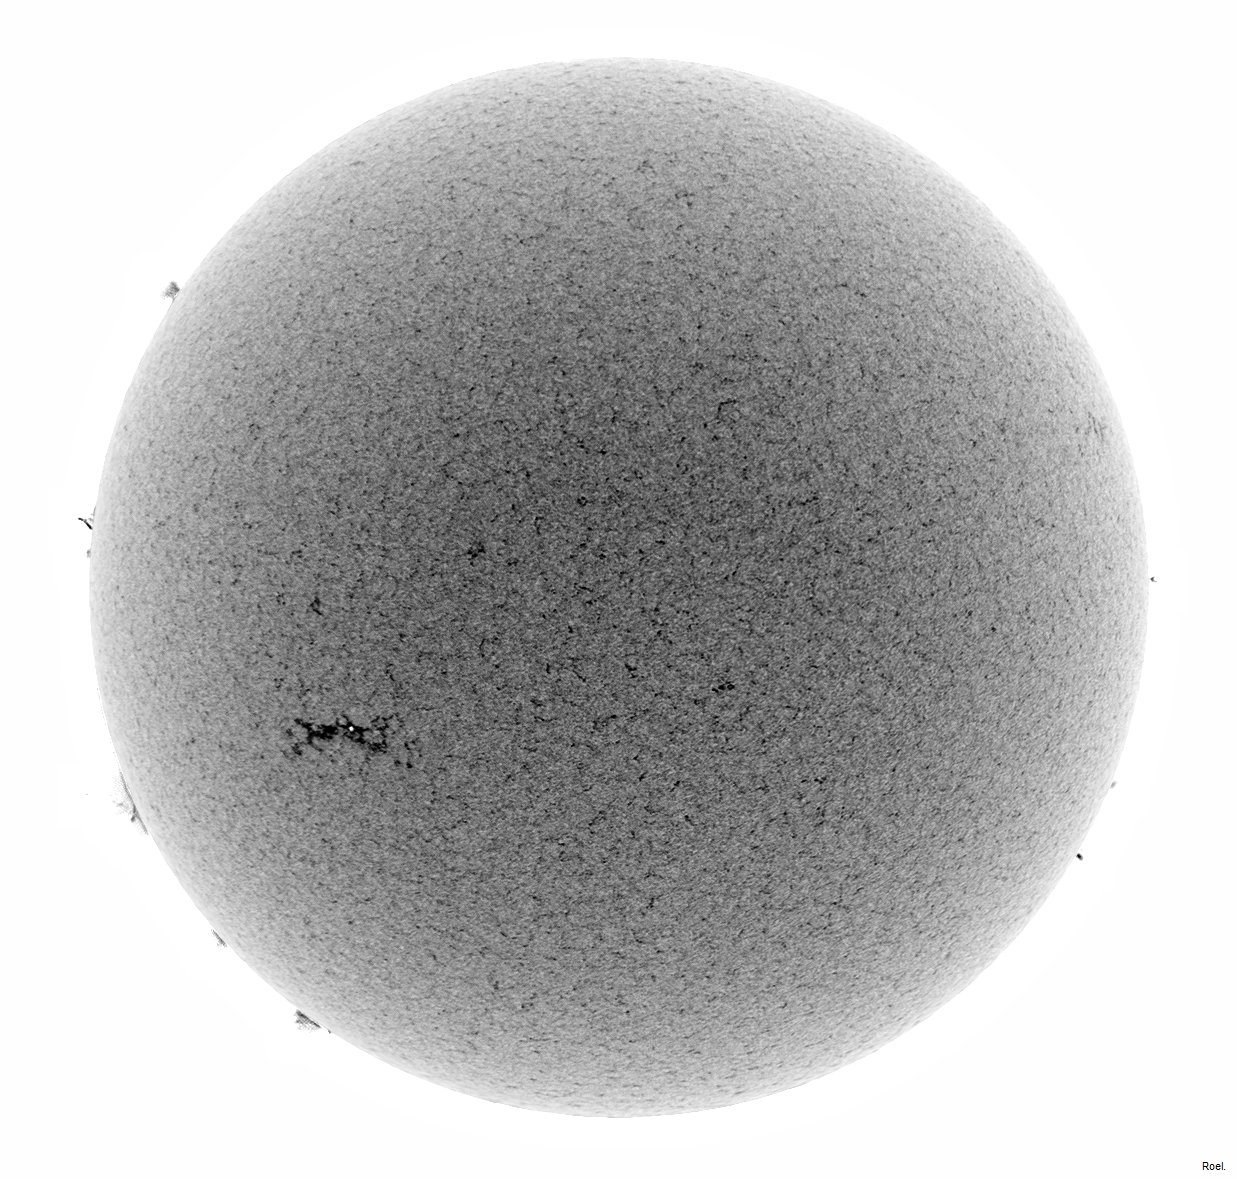 Sol del 1 de agosto del 2018-Meade-CaK-PSTmod-1neg.jpg